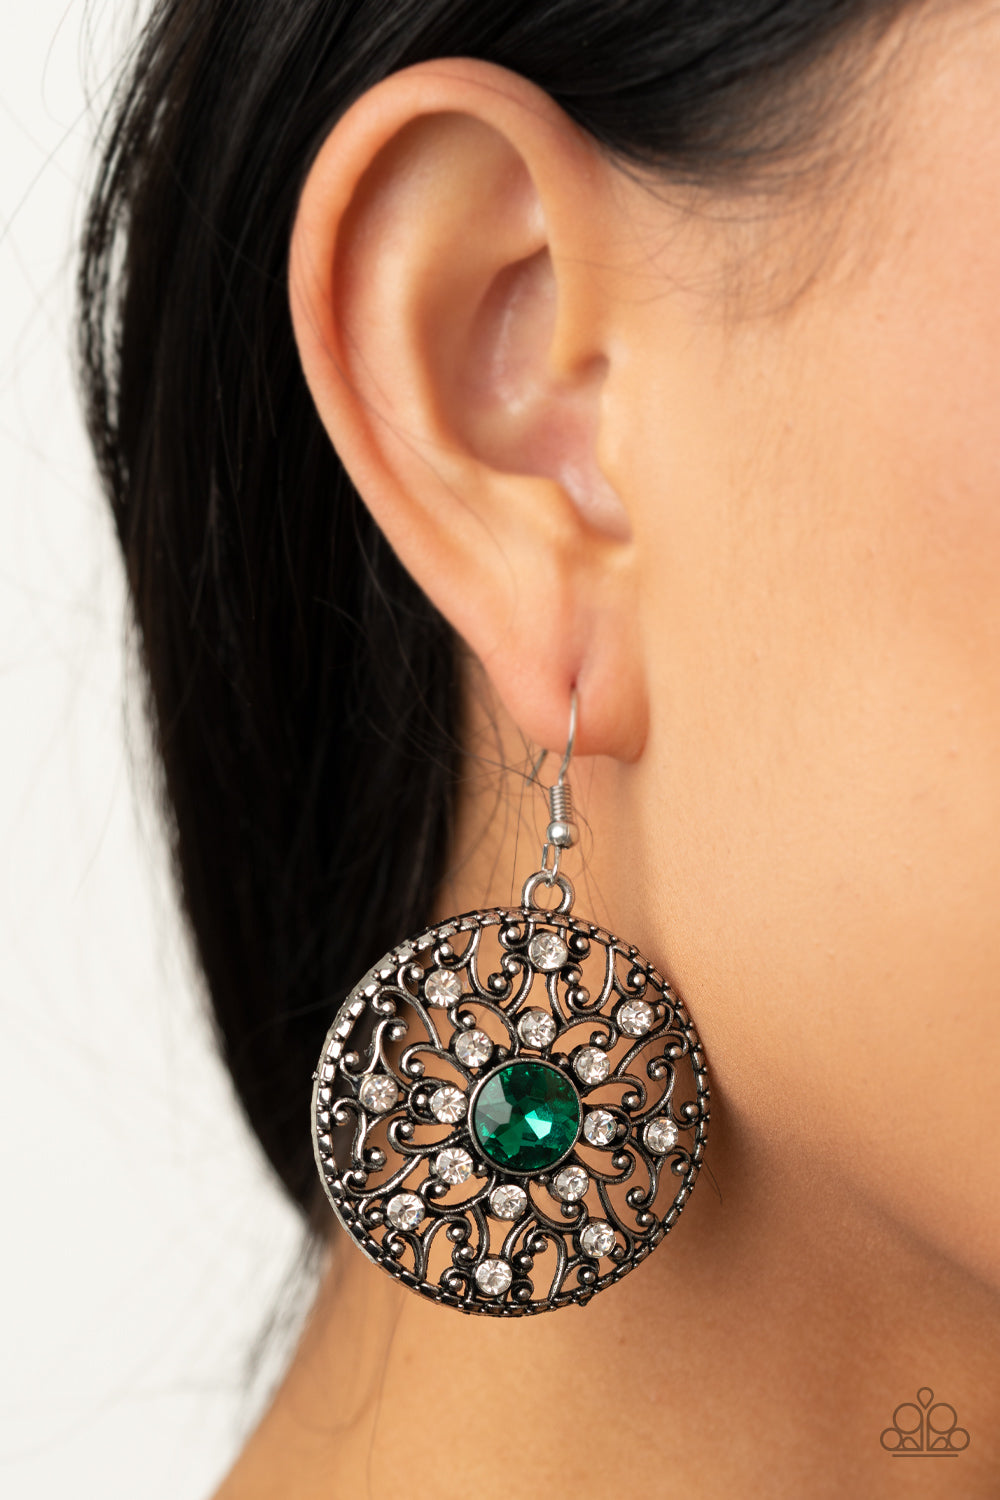 GLOW Your True Colors Green Earring Paparazzi Accessories. Get Free Shipping.#P5RE-GRXX-118XX